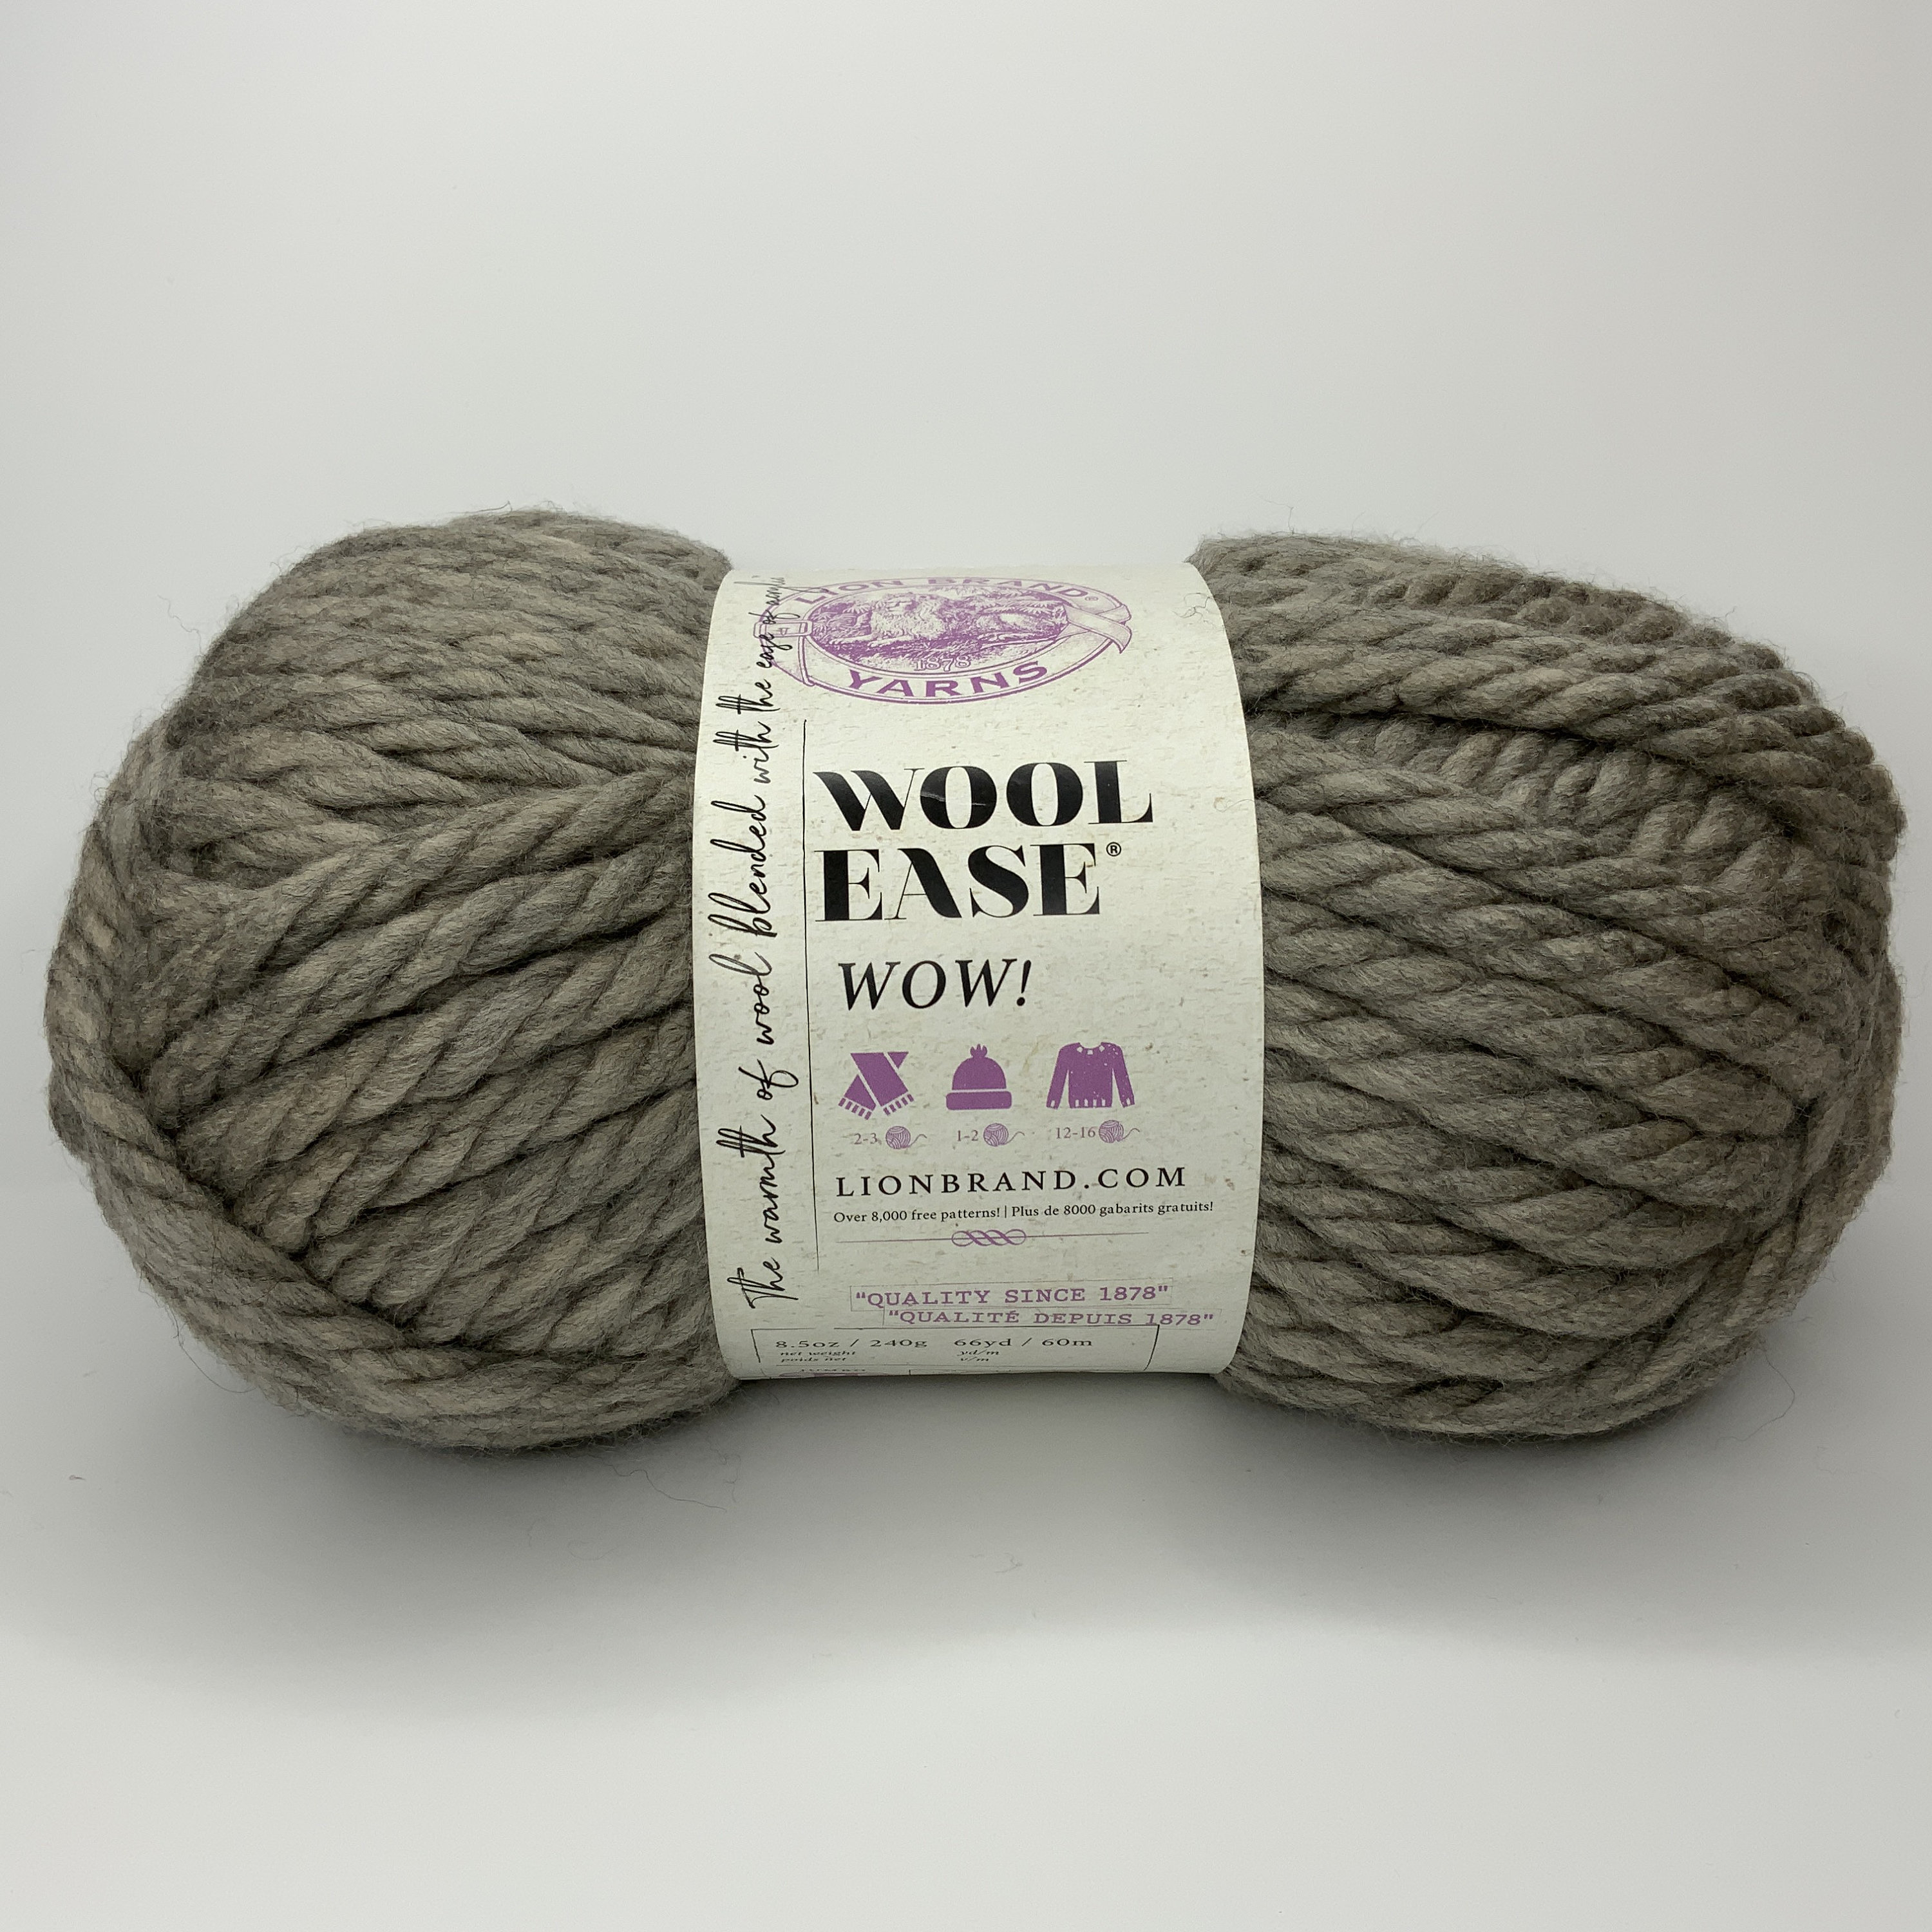 Mushroom Wool-ease Wow Yarn 